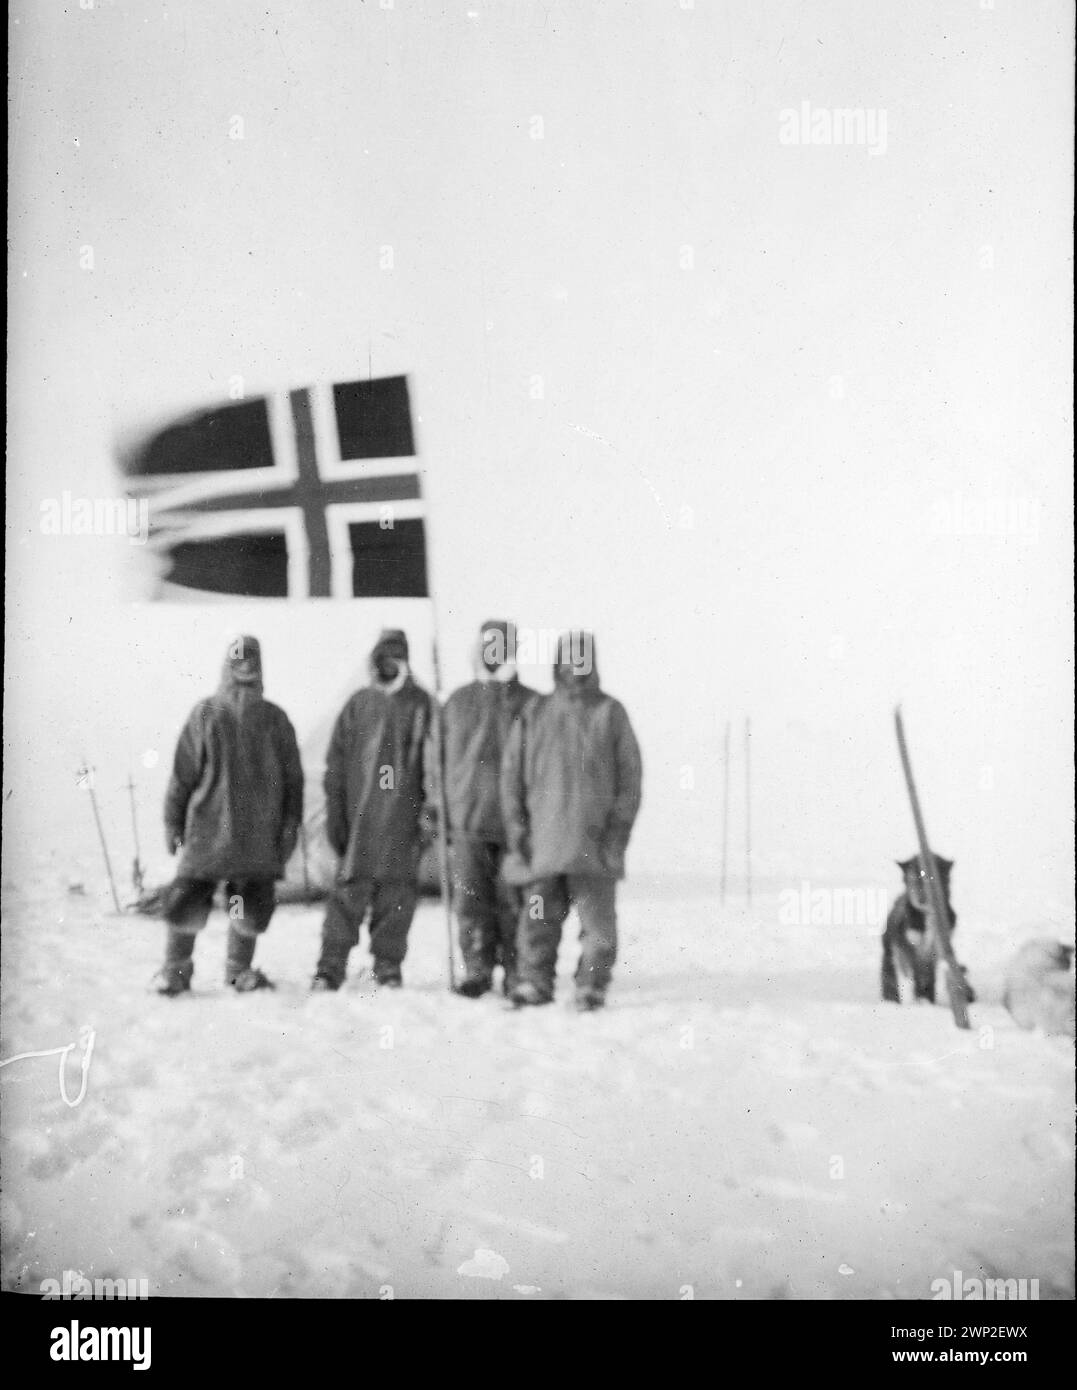 Oscar Wisting, Olav Bjaaland, Sverre Hassel and Roald Amundsen at the South Pole on 14 December 1911 Stock Photo